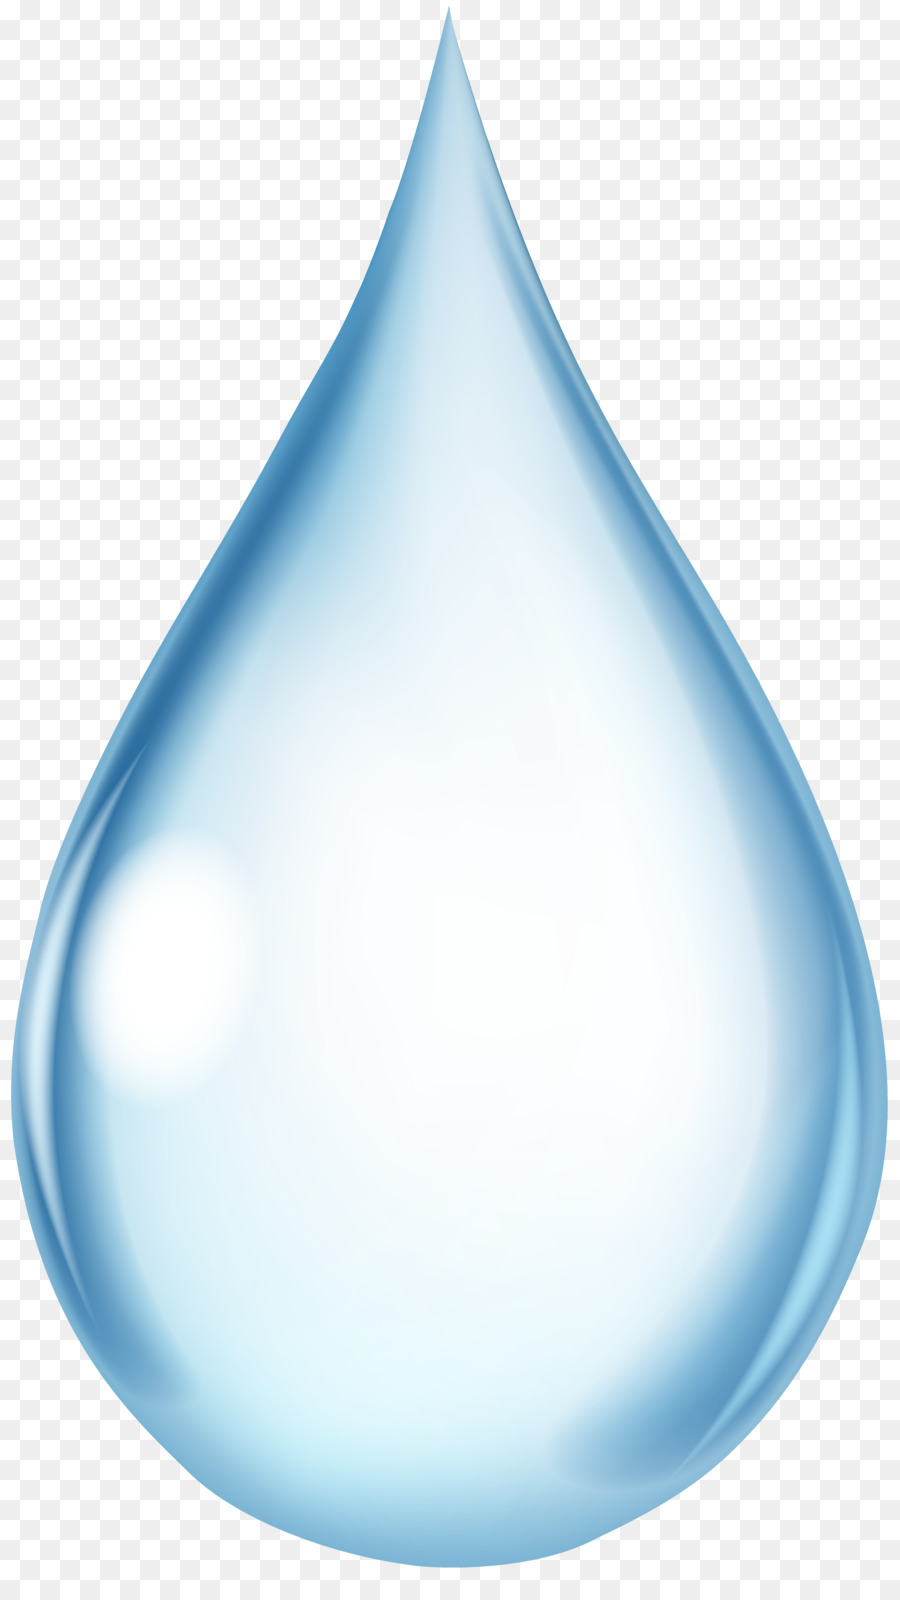 Water Drop Splash Clip art - drops png download - 4544*8000 - Free Transparent Water png Download.